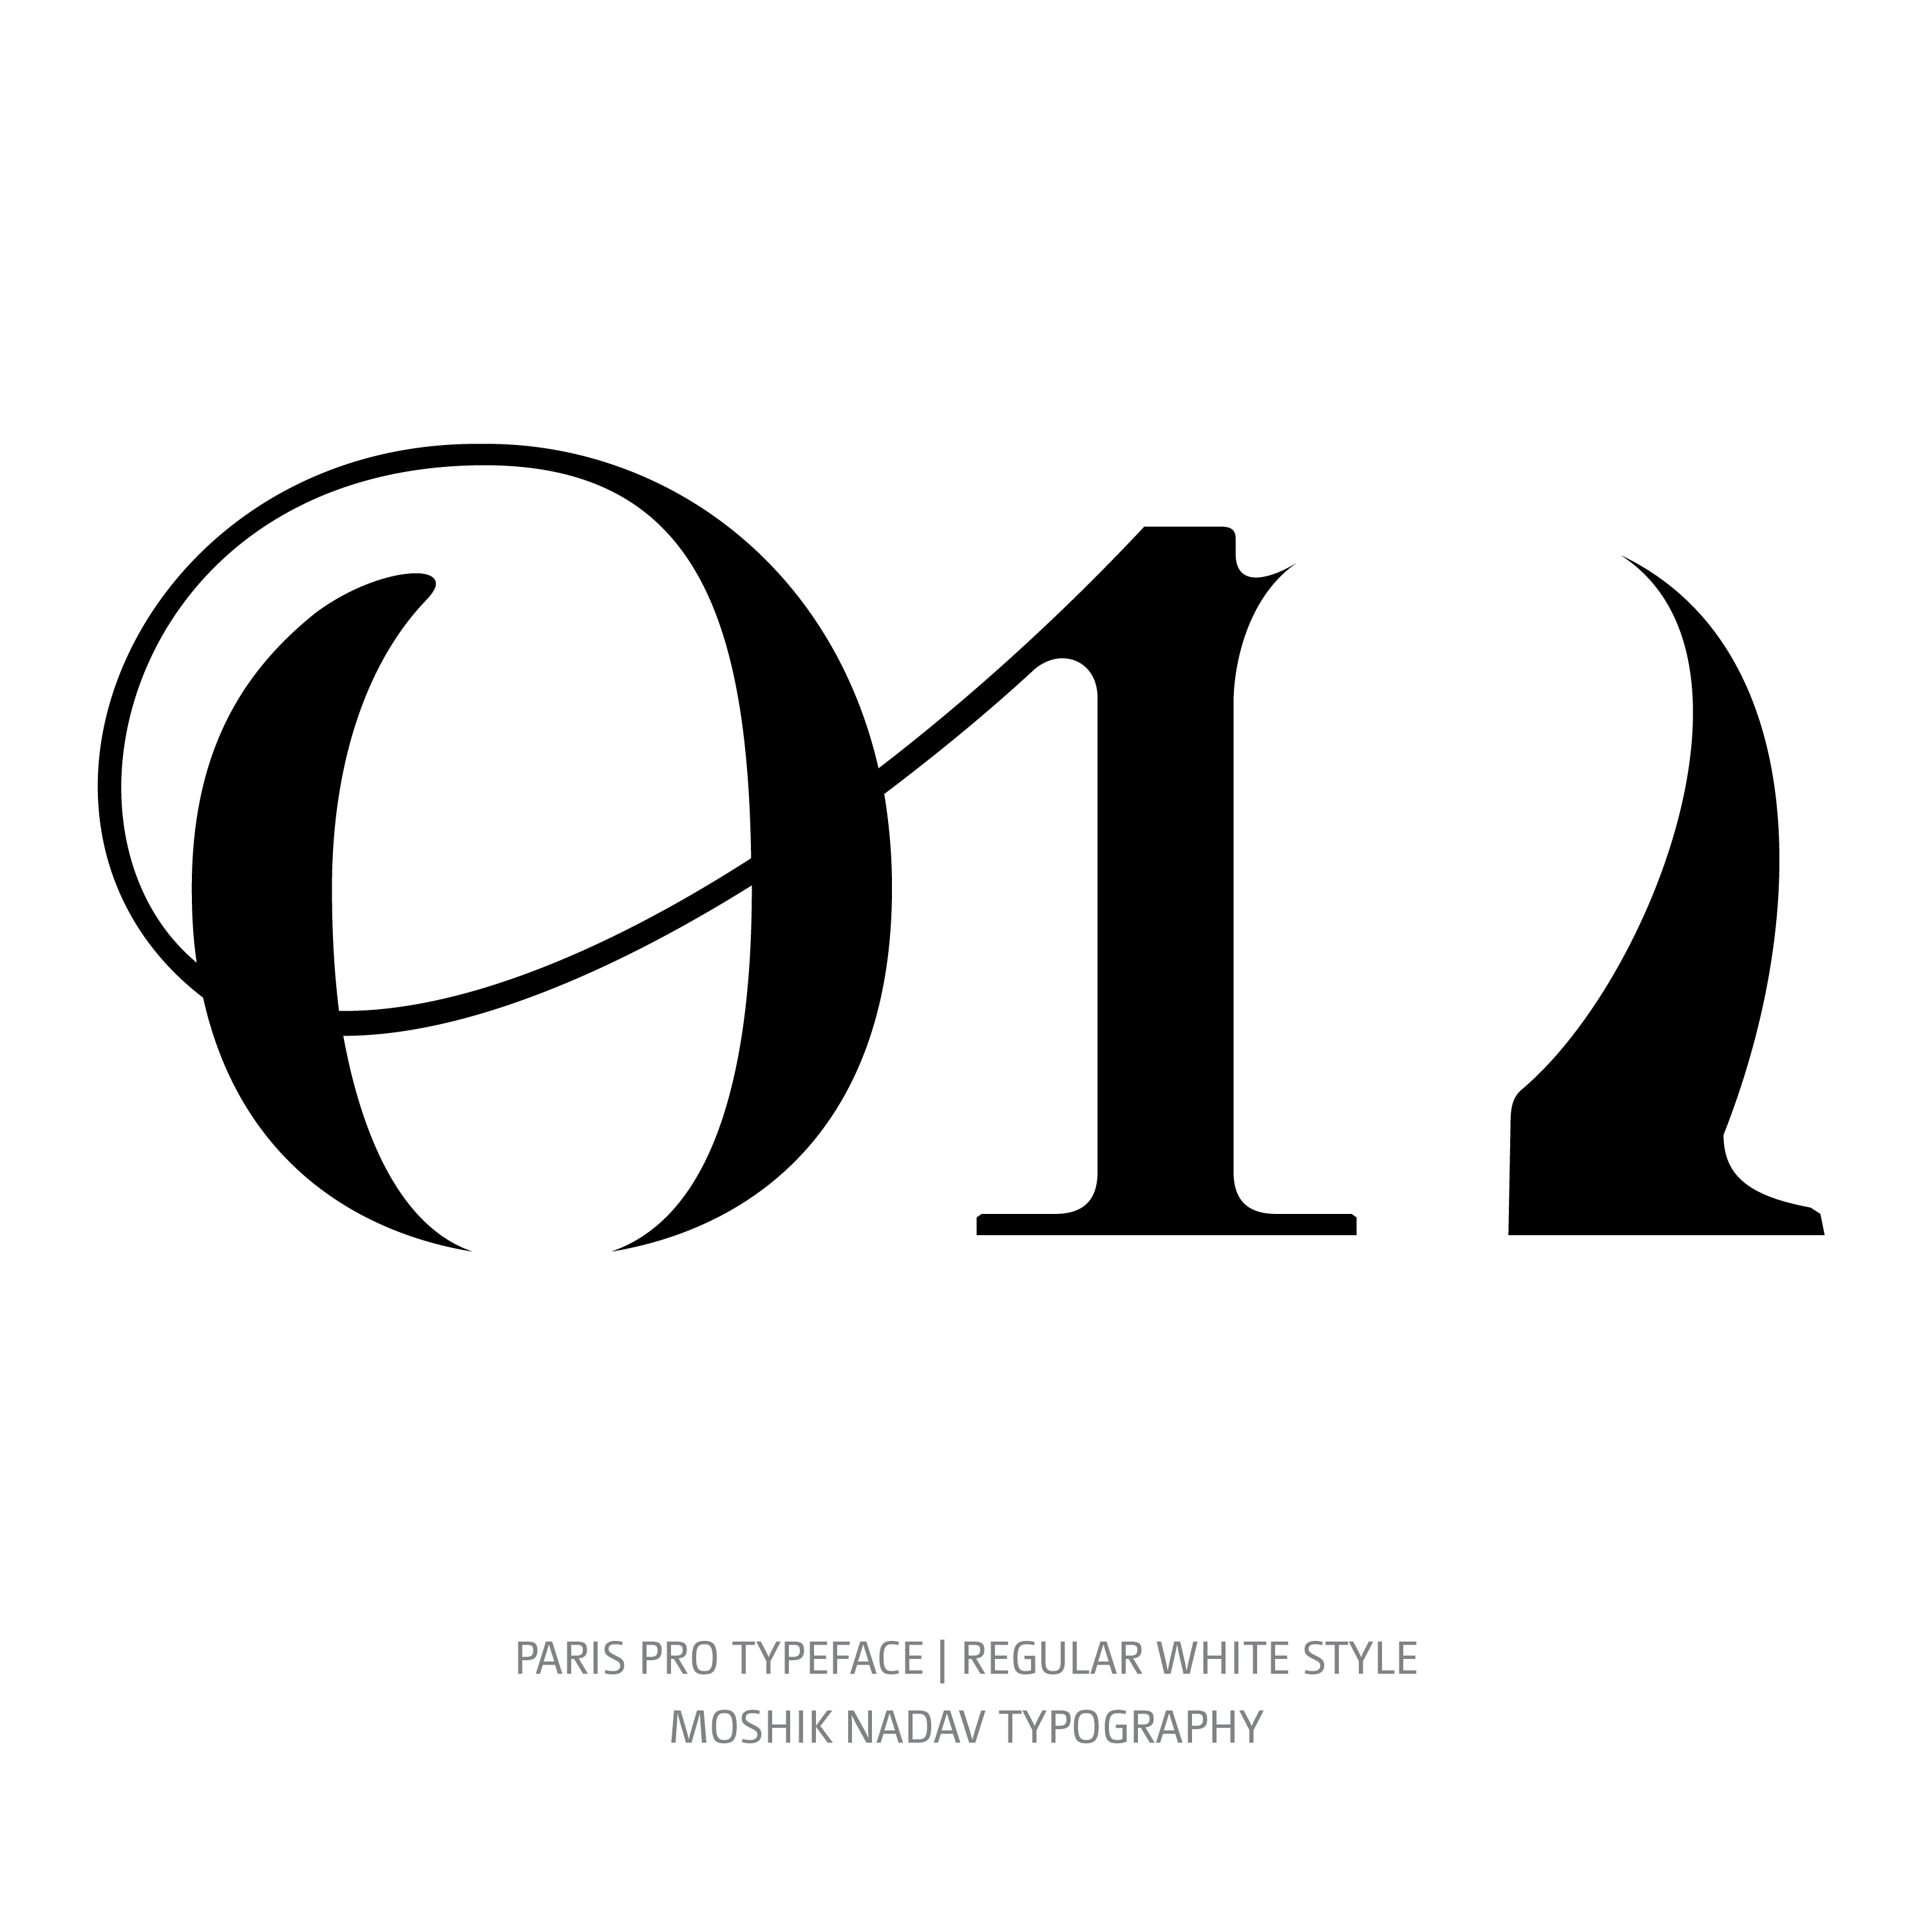 Paris Pro Typeface Regular White on ligature